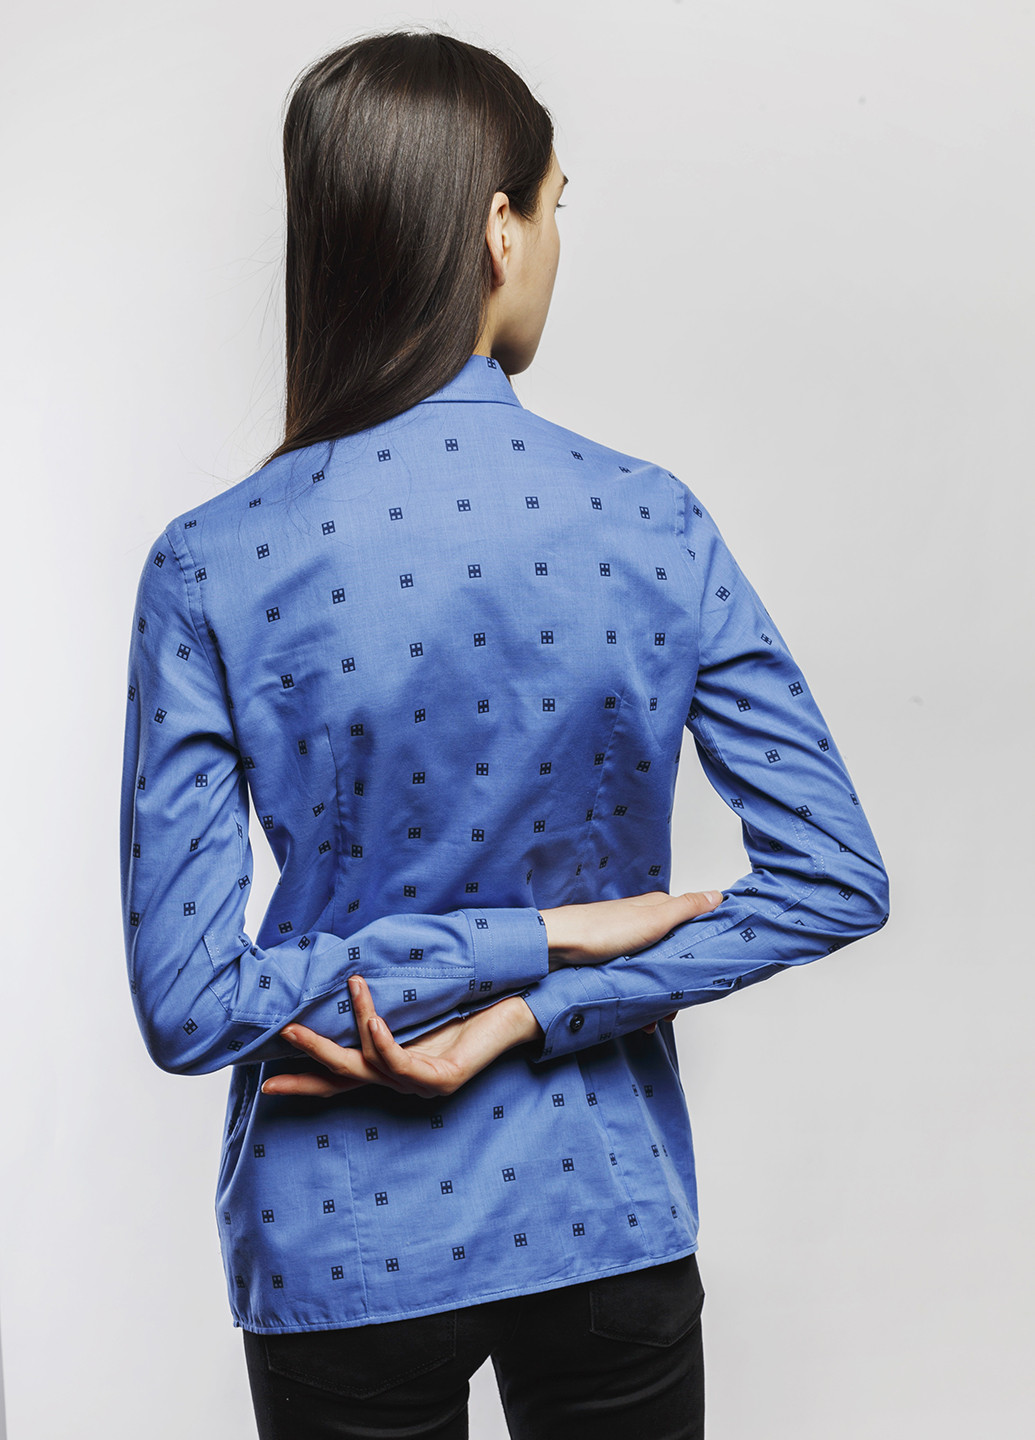 Светло-синяя кэжуал рубашка с геометрическим узором Franttini